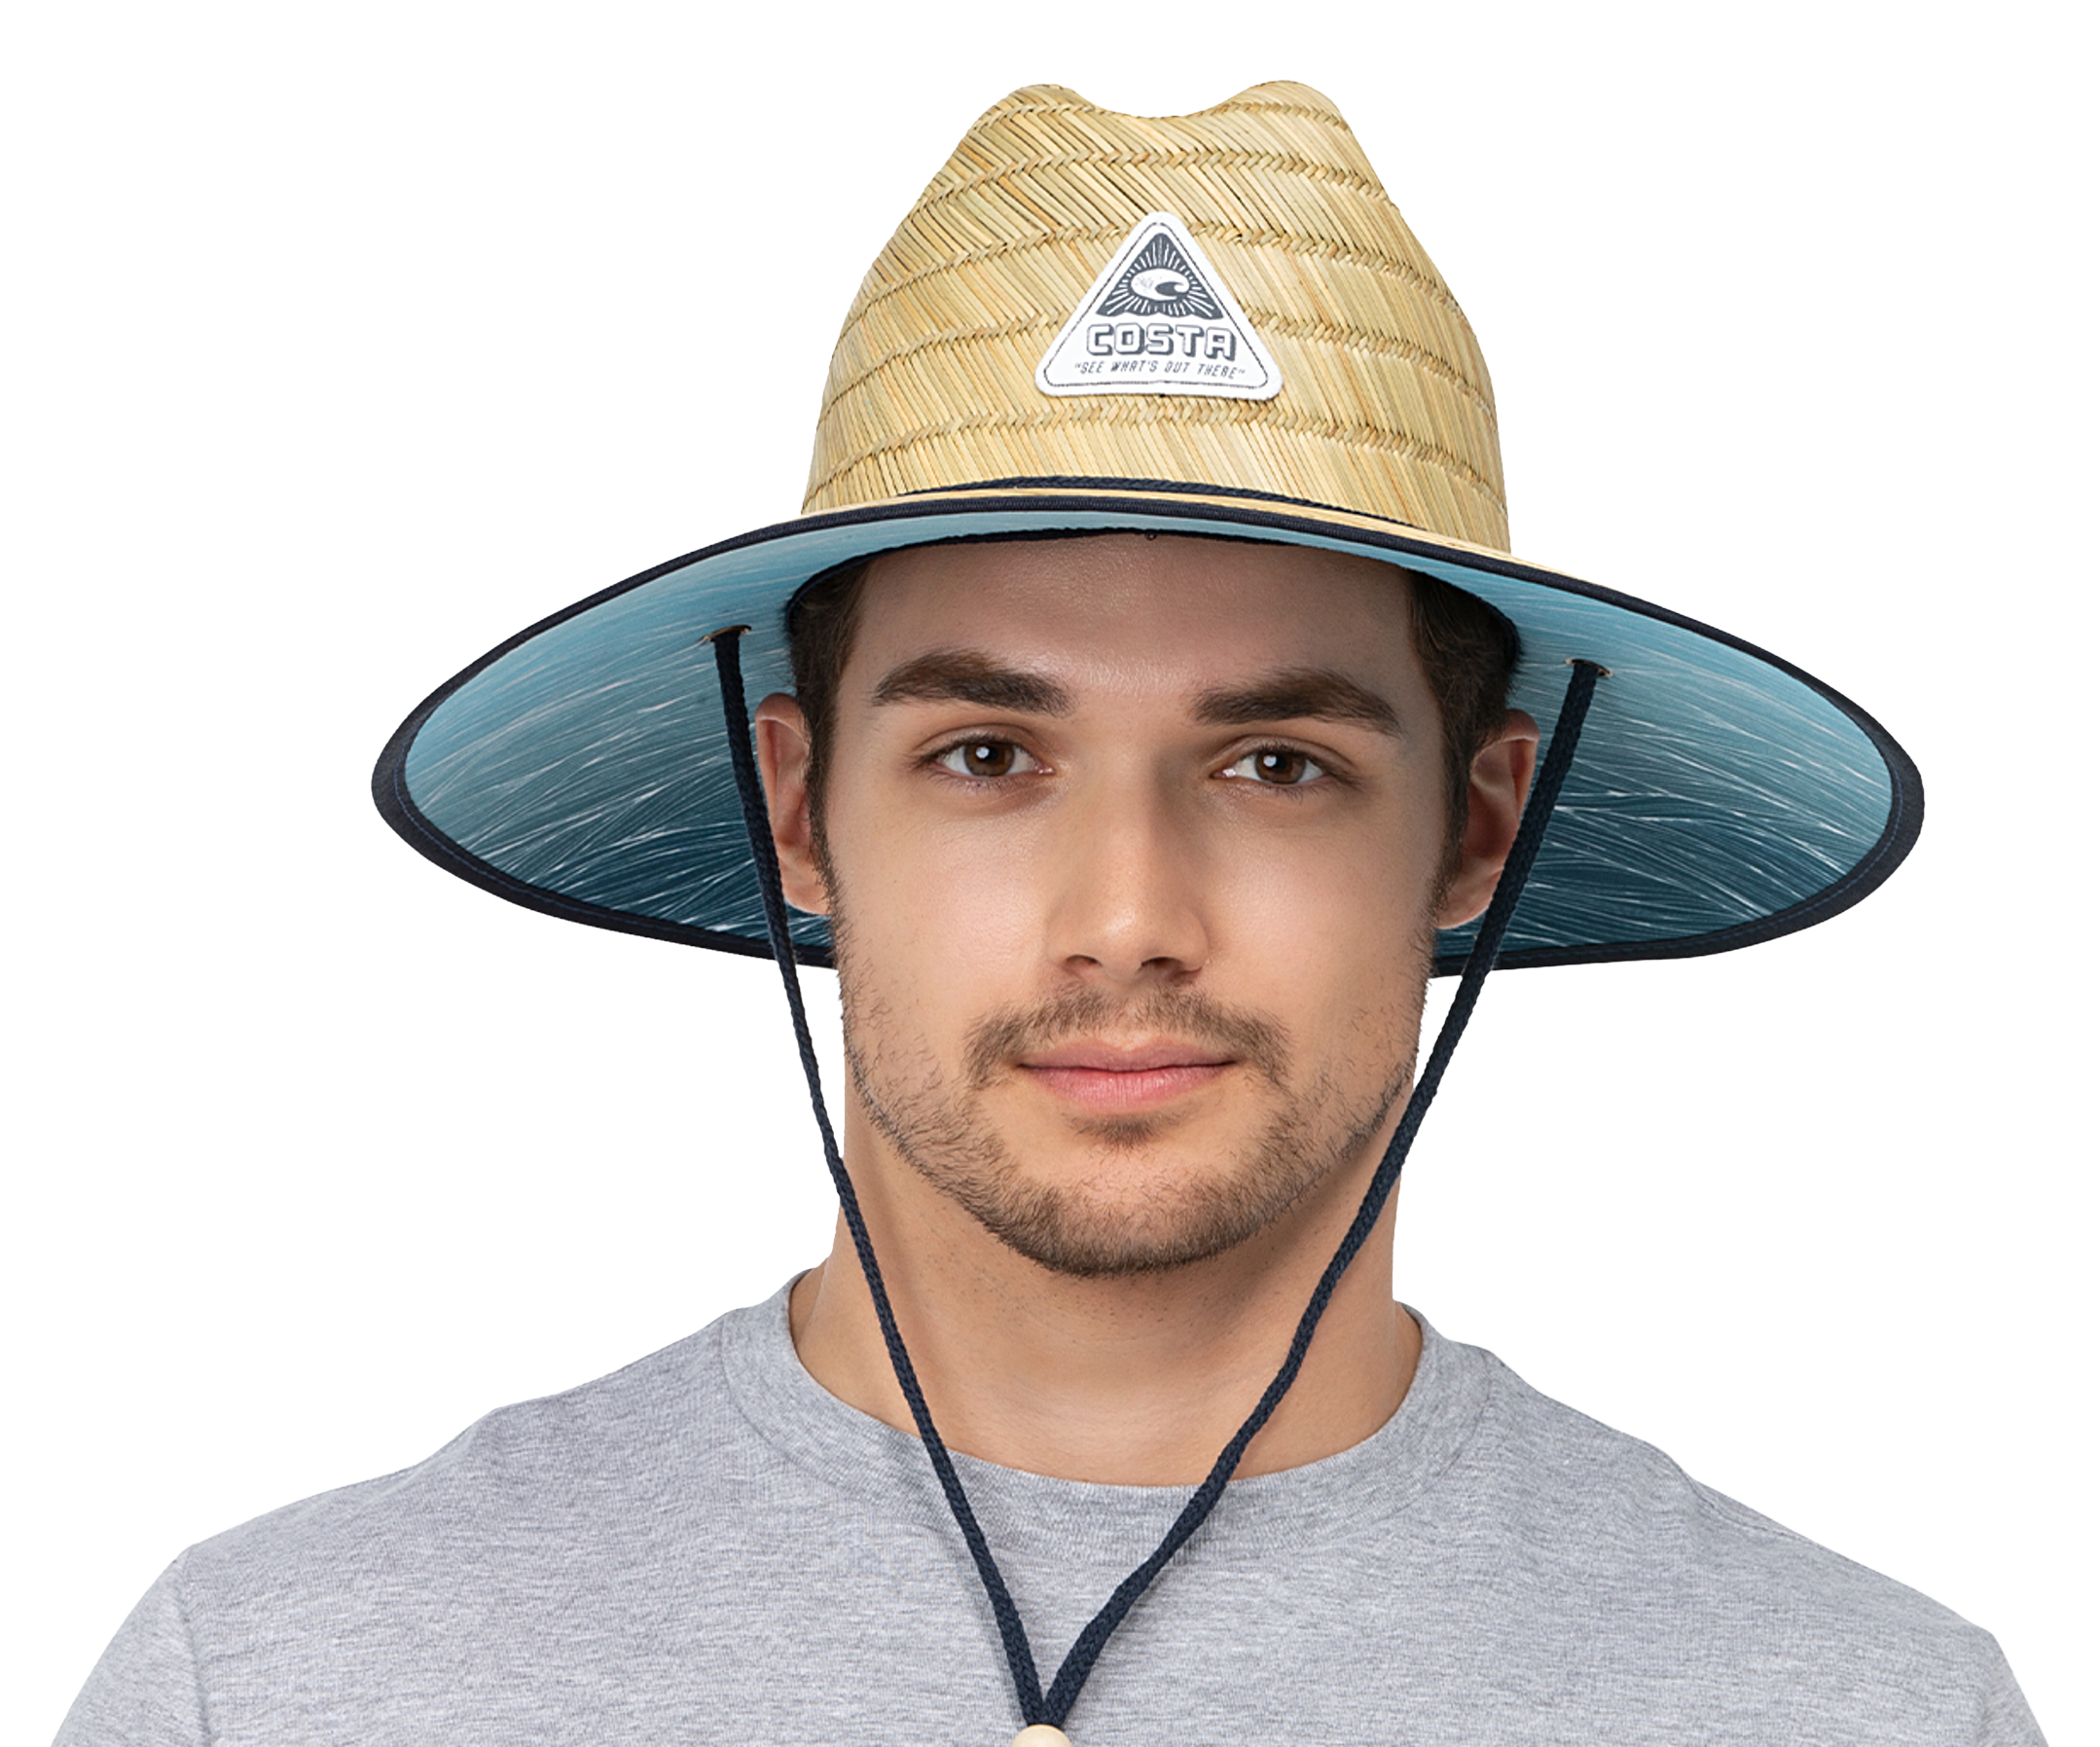 Costa Del Mar Lifeguard Swells Print Straw Hat